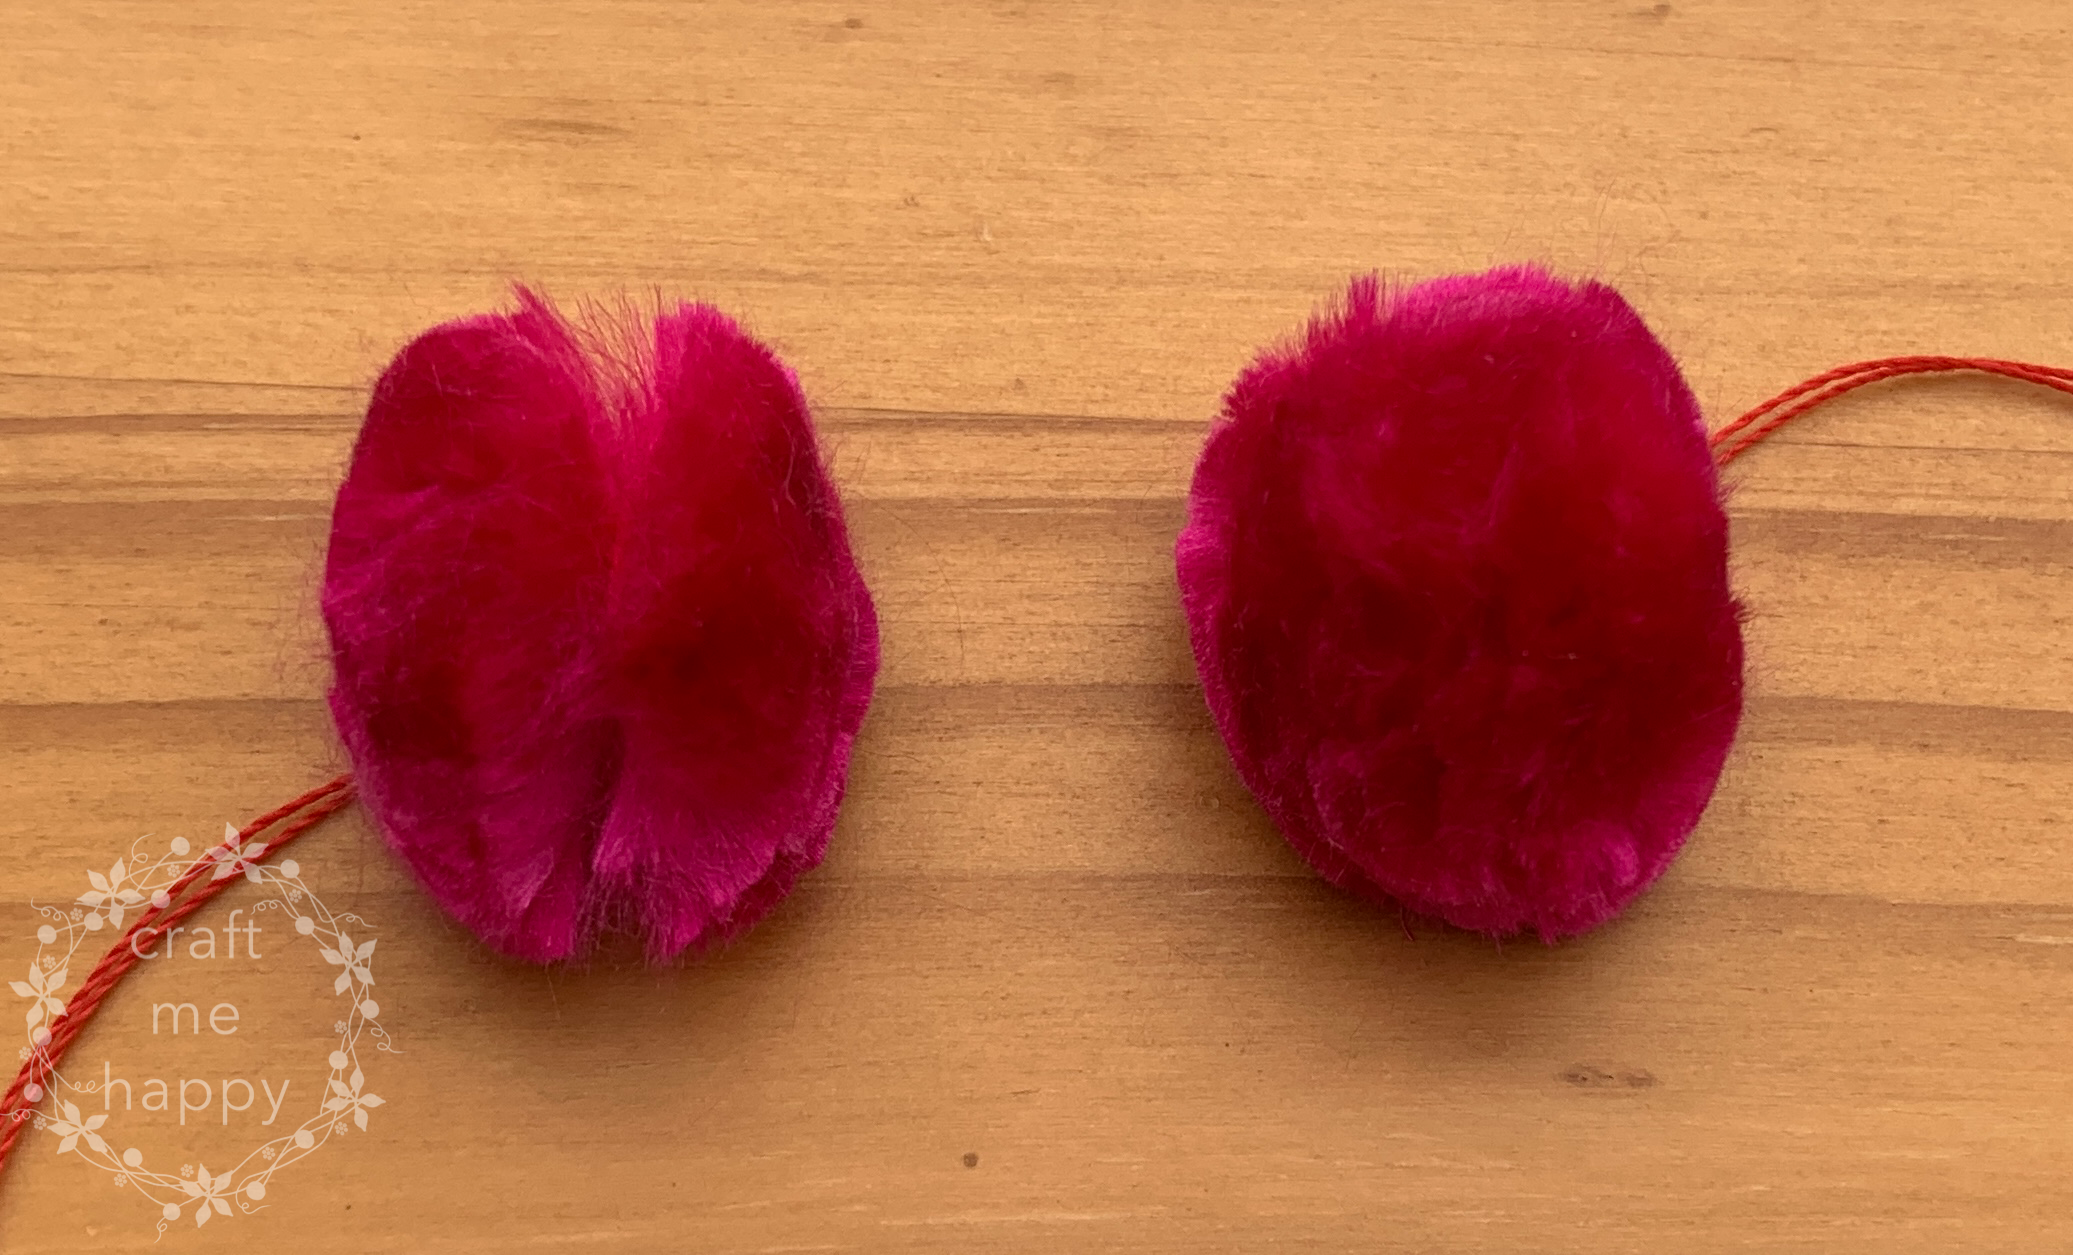 Craft me Happy!: Craftmehappy Joyful Wreath #6 - Making Fluffy Silk Poms  Poms Using the Multipom